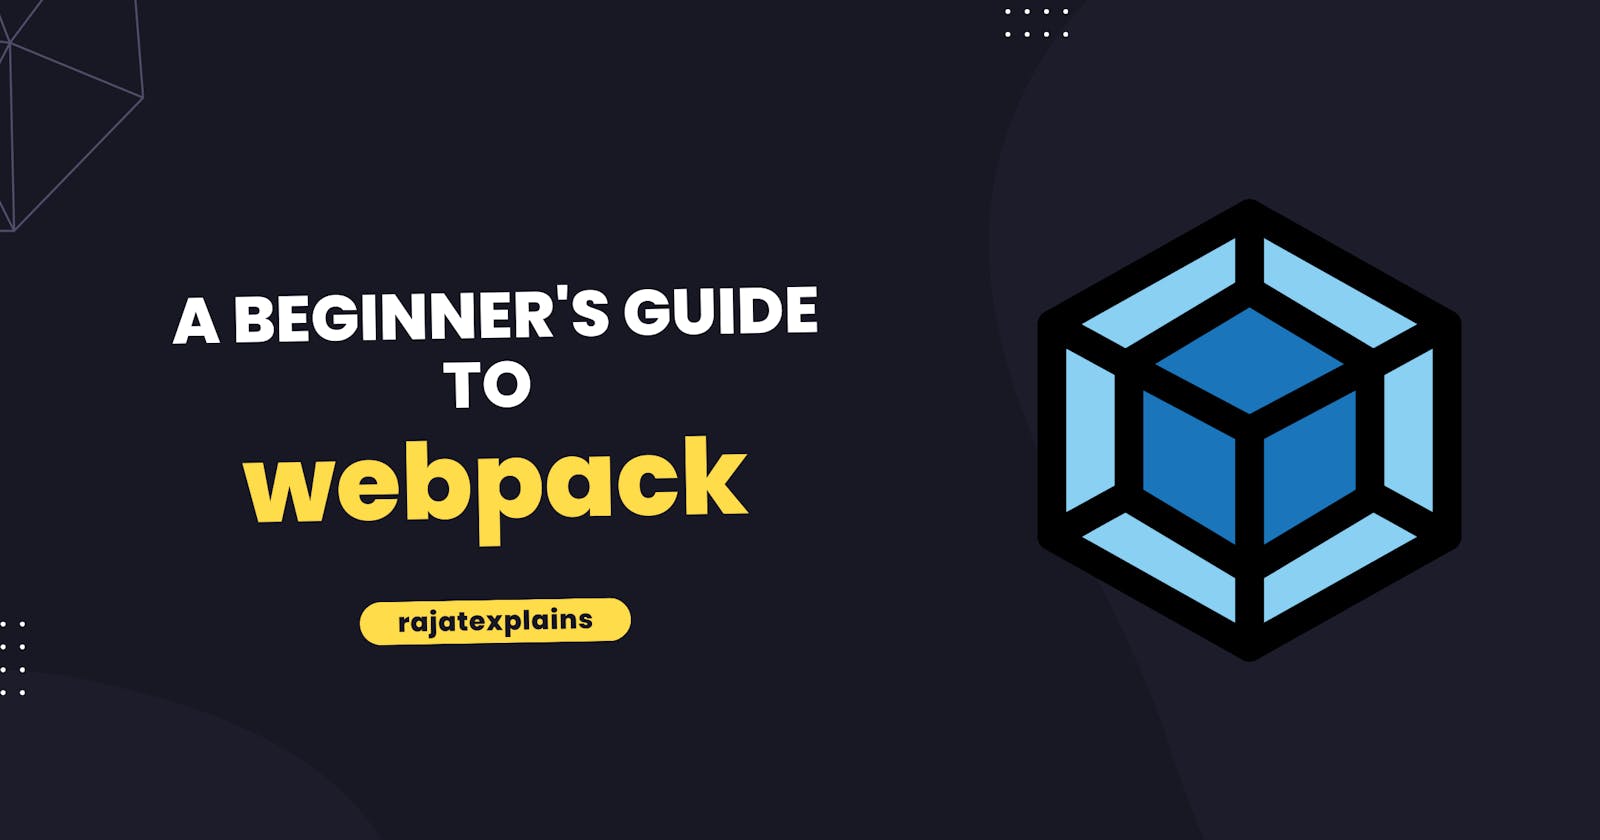 A Beginner's Guide to Webpack